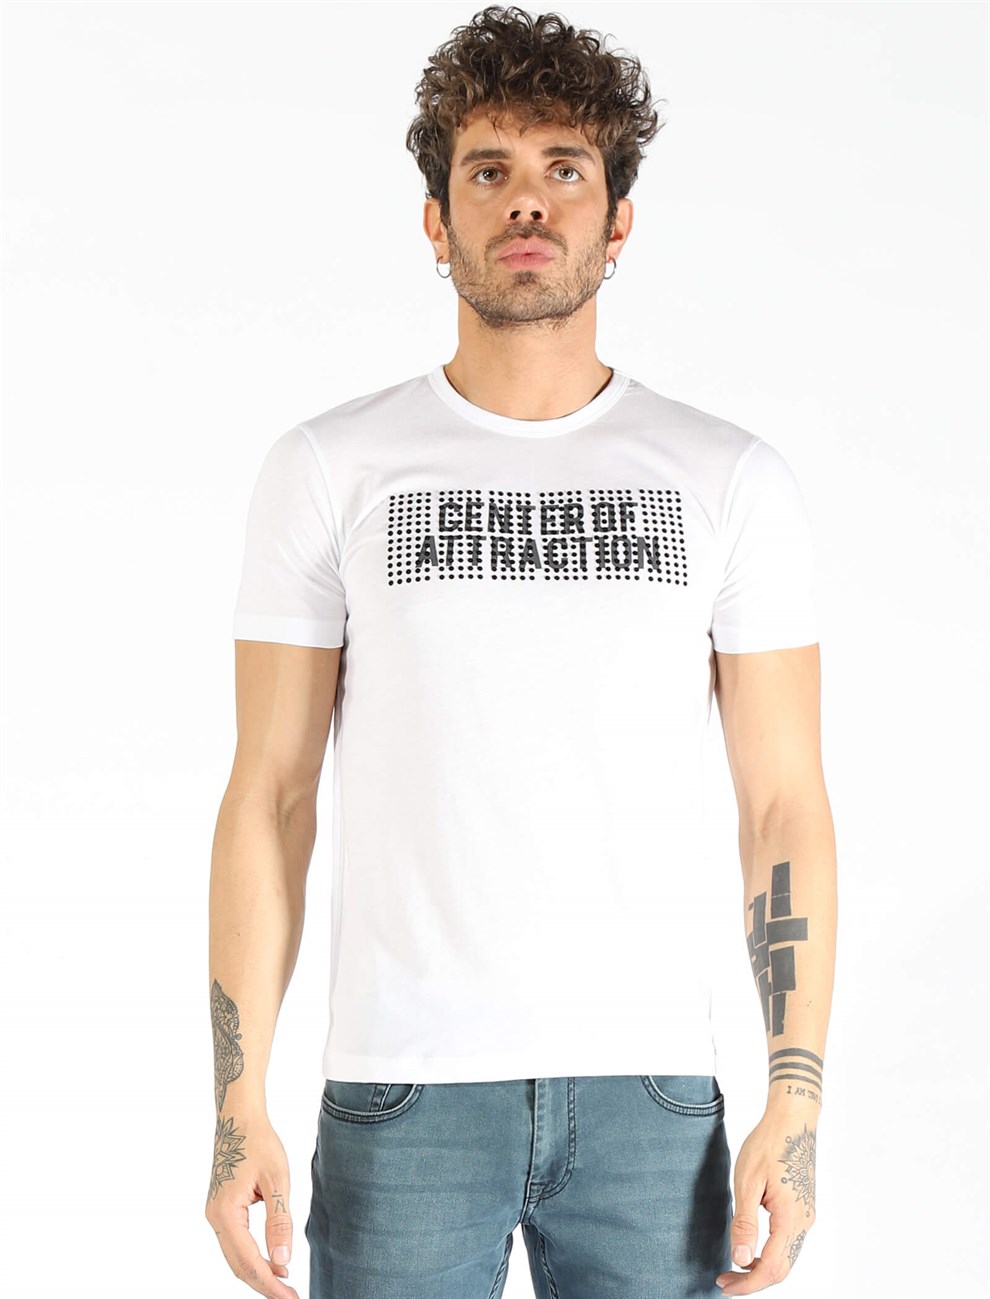 Men’s Crew Neck White T-shirt